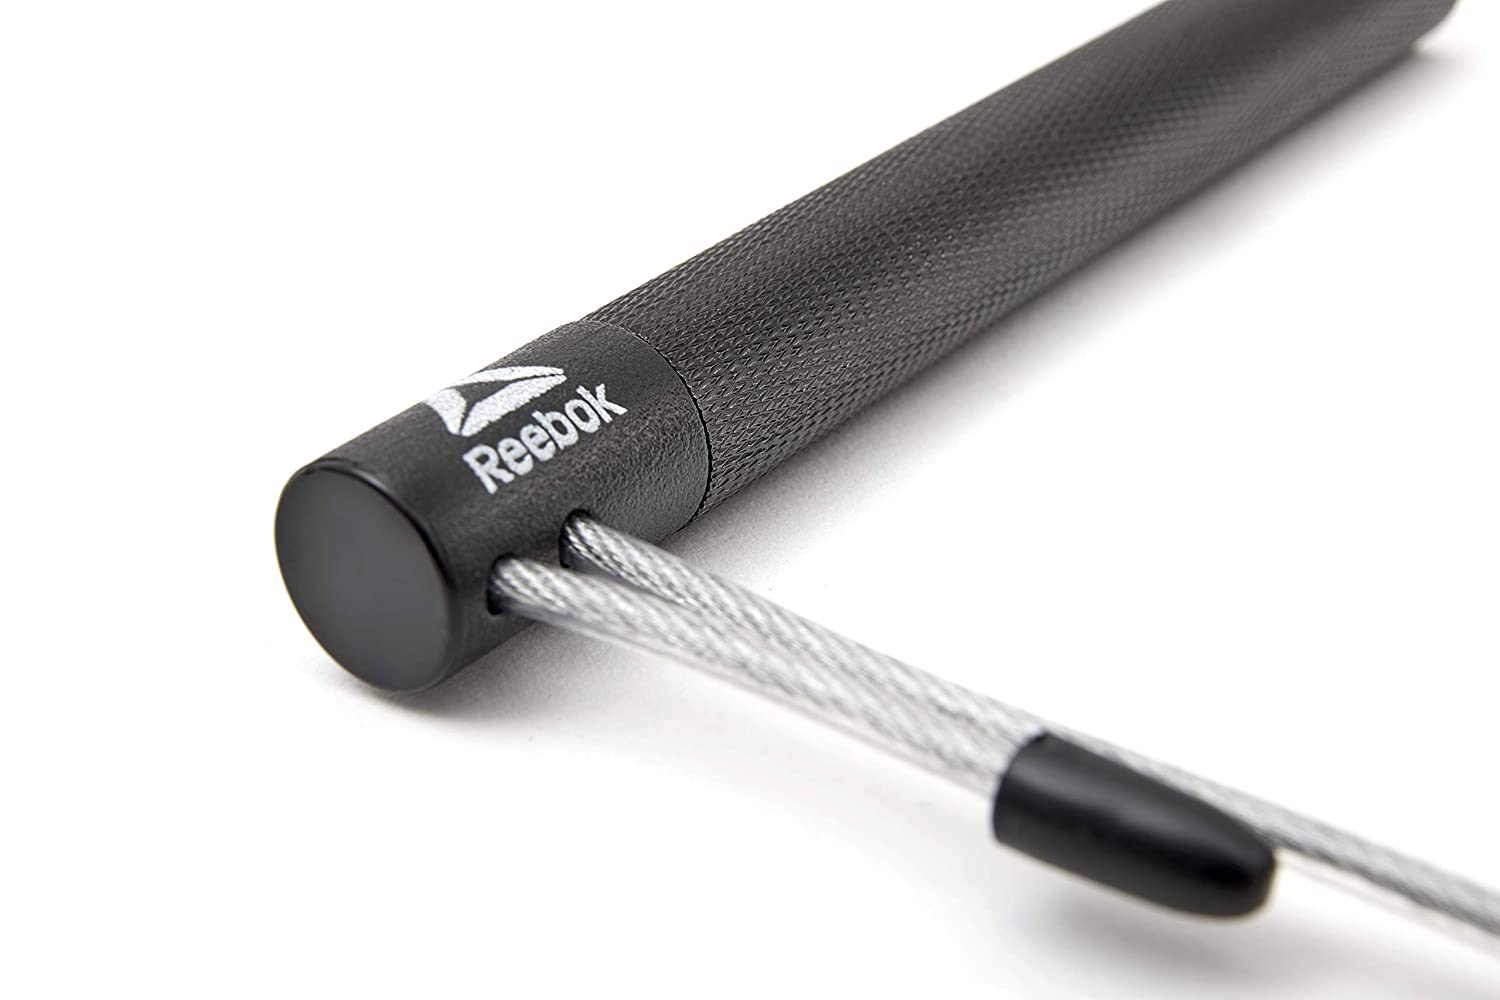 Reebok RARP-11082 Metal Skipping Rope (Silver) - Best Price online Prokicksports.com